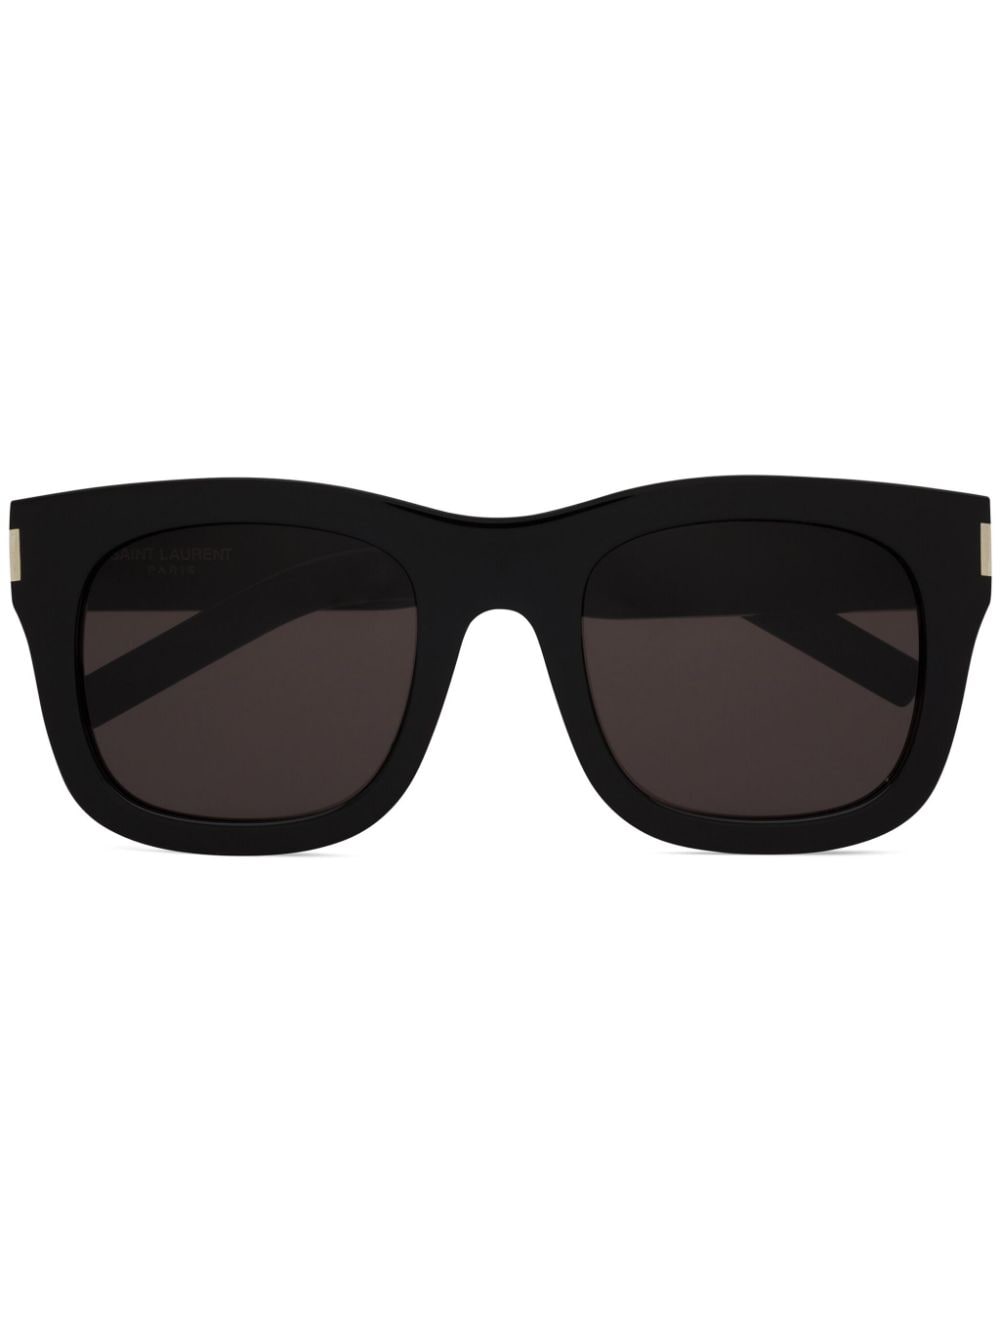 Image 1 of Saint Laurent Eyewear SL 650 Monceau square-frame sunglasses